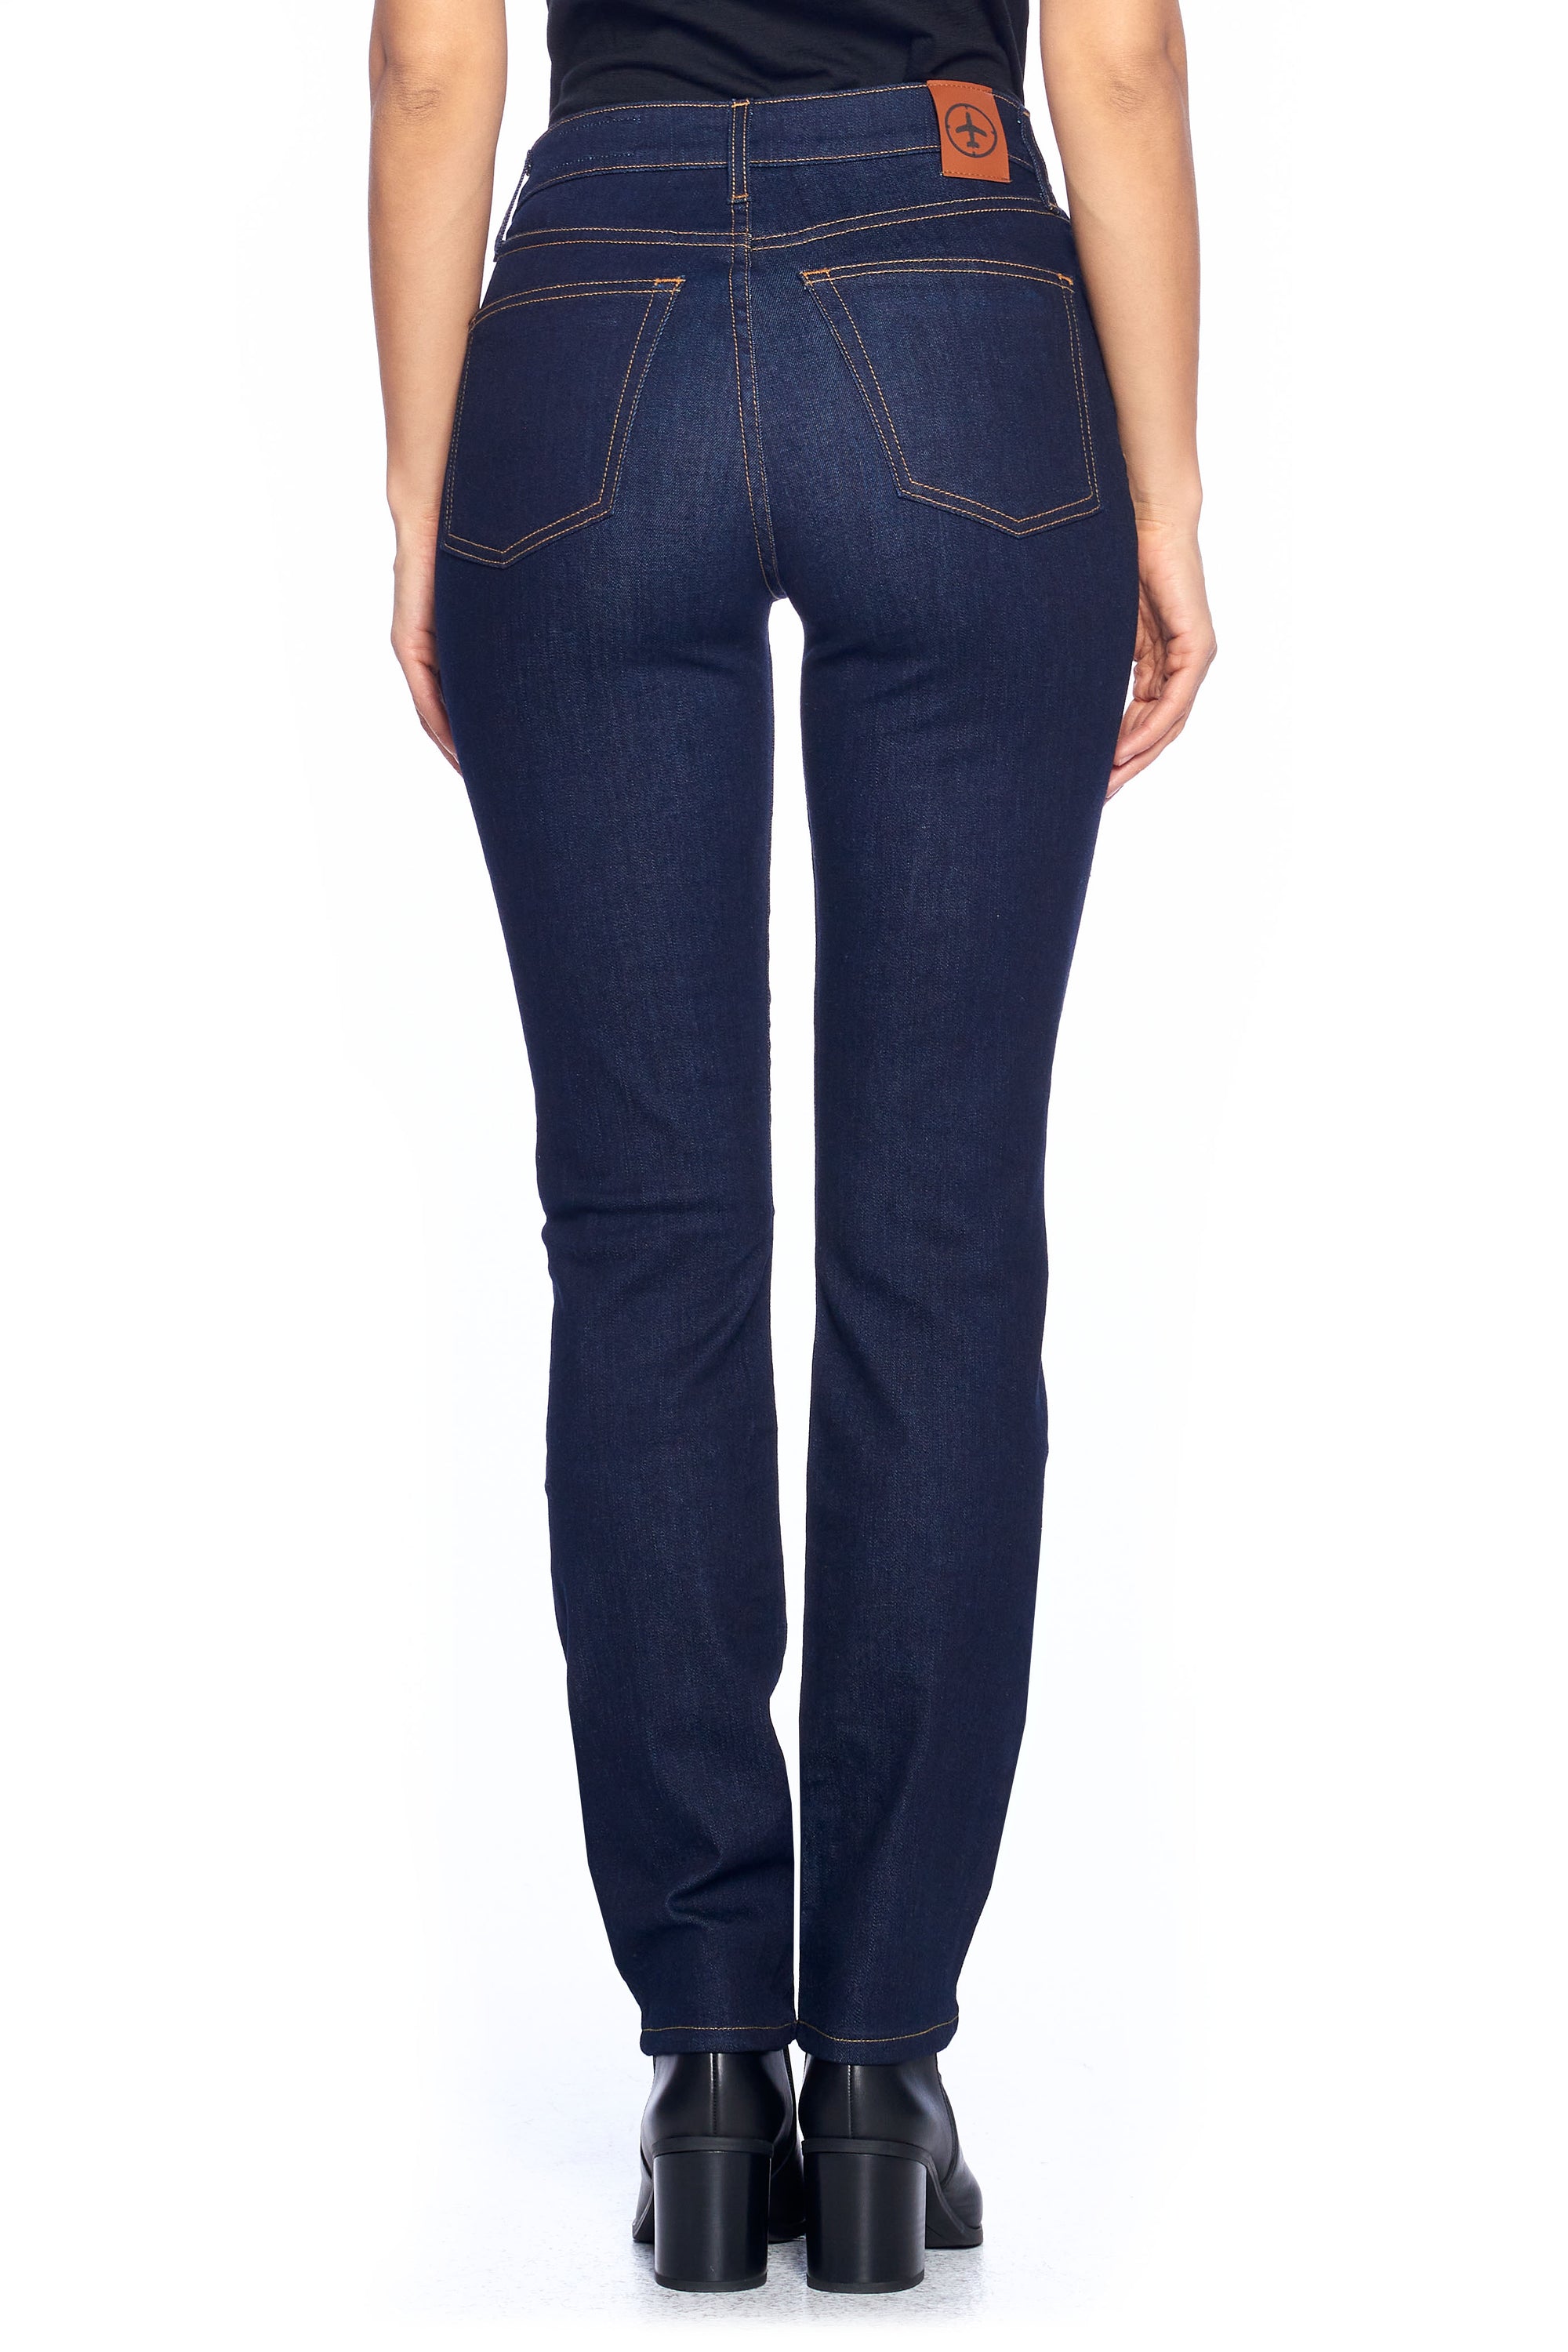 Aviator women's travel jeans in slim straight dark indigo